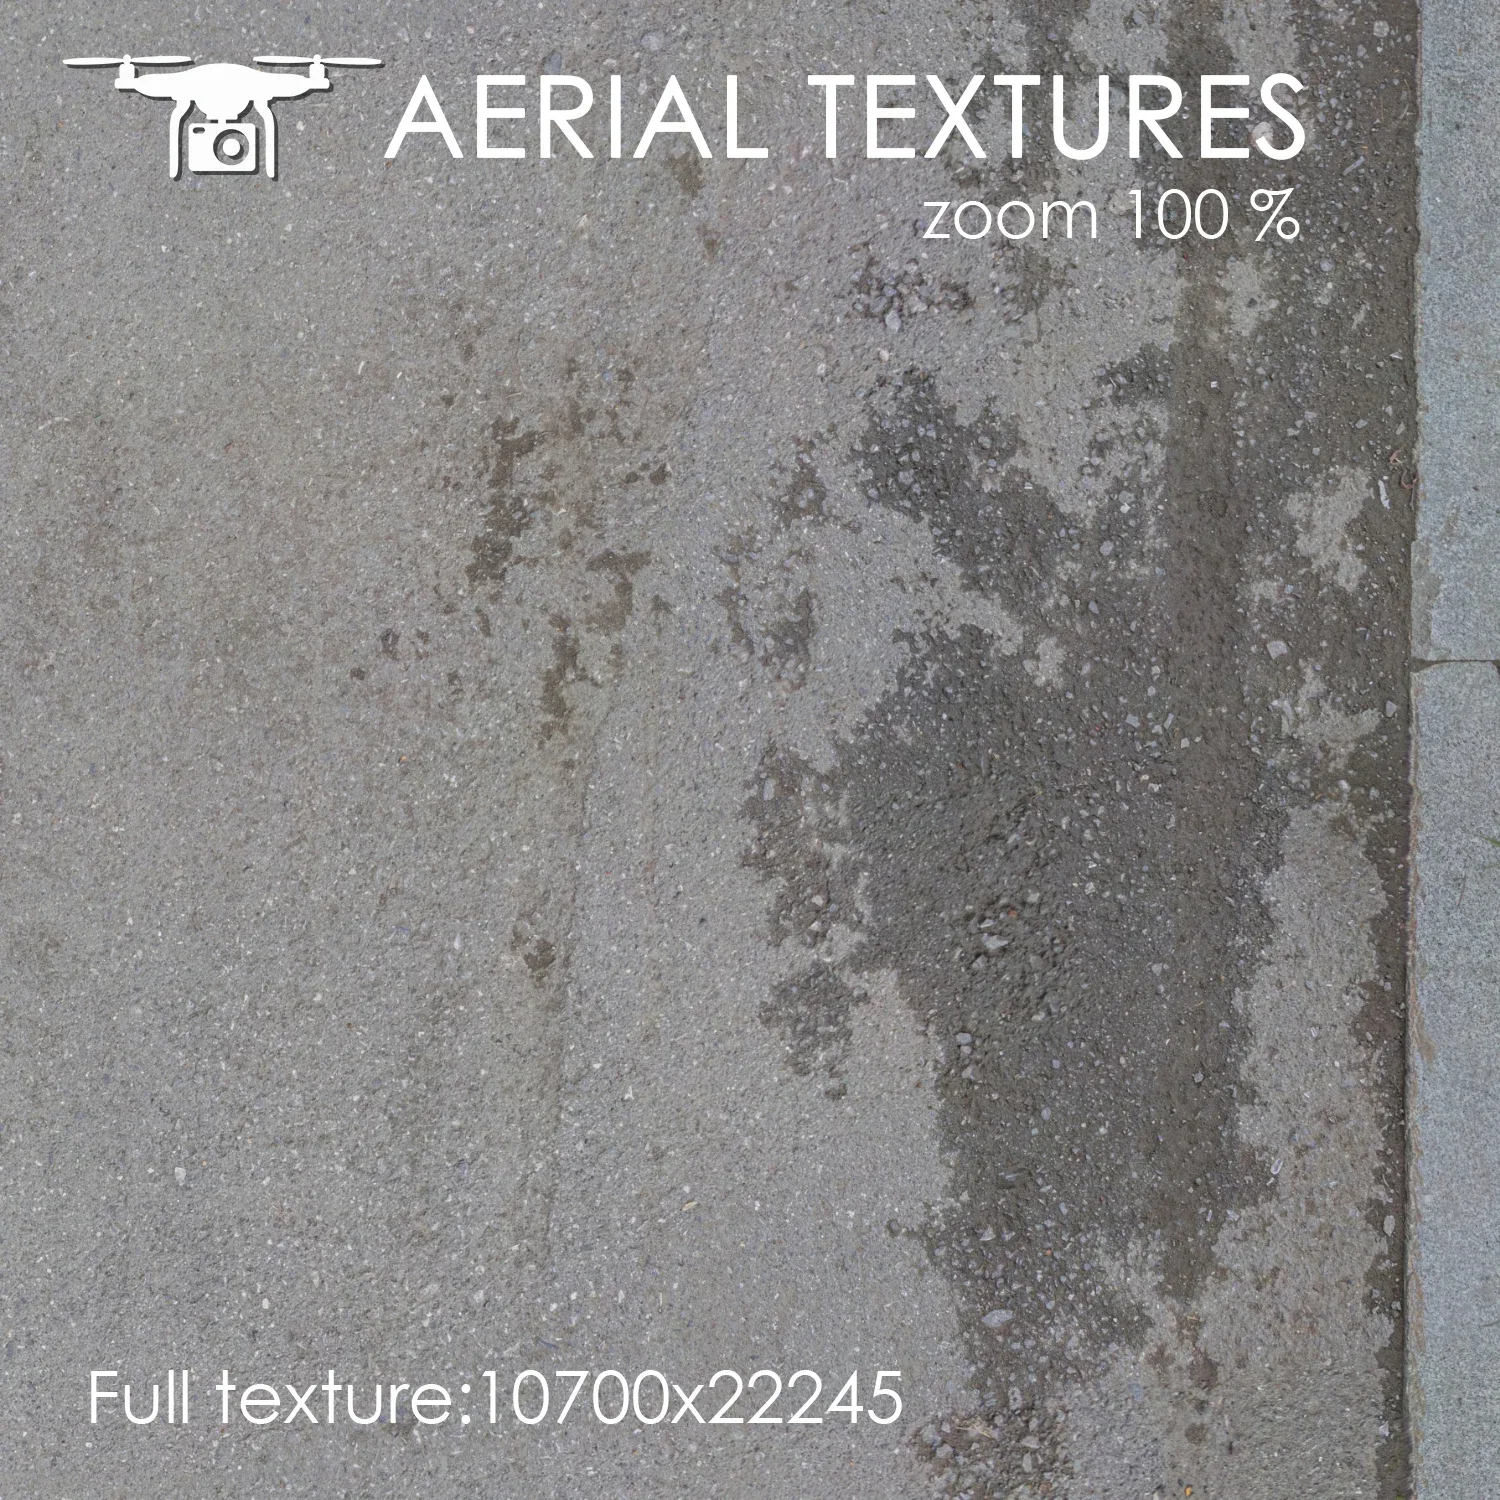 Aerial Texture 324